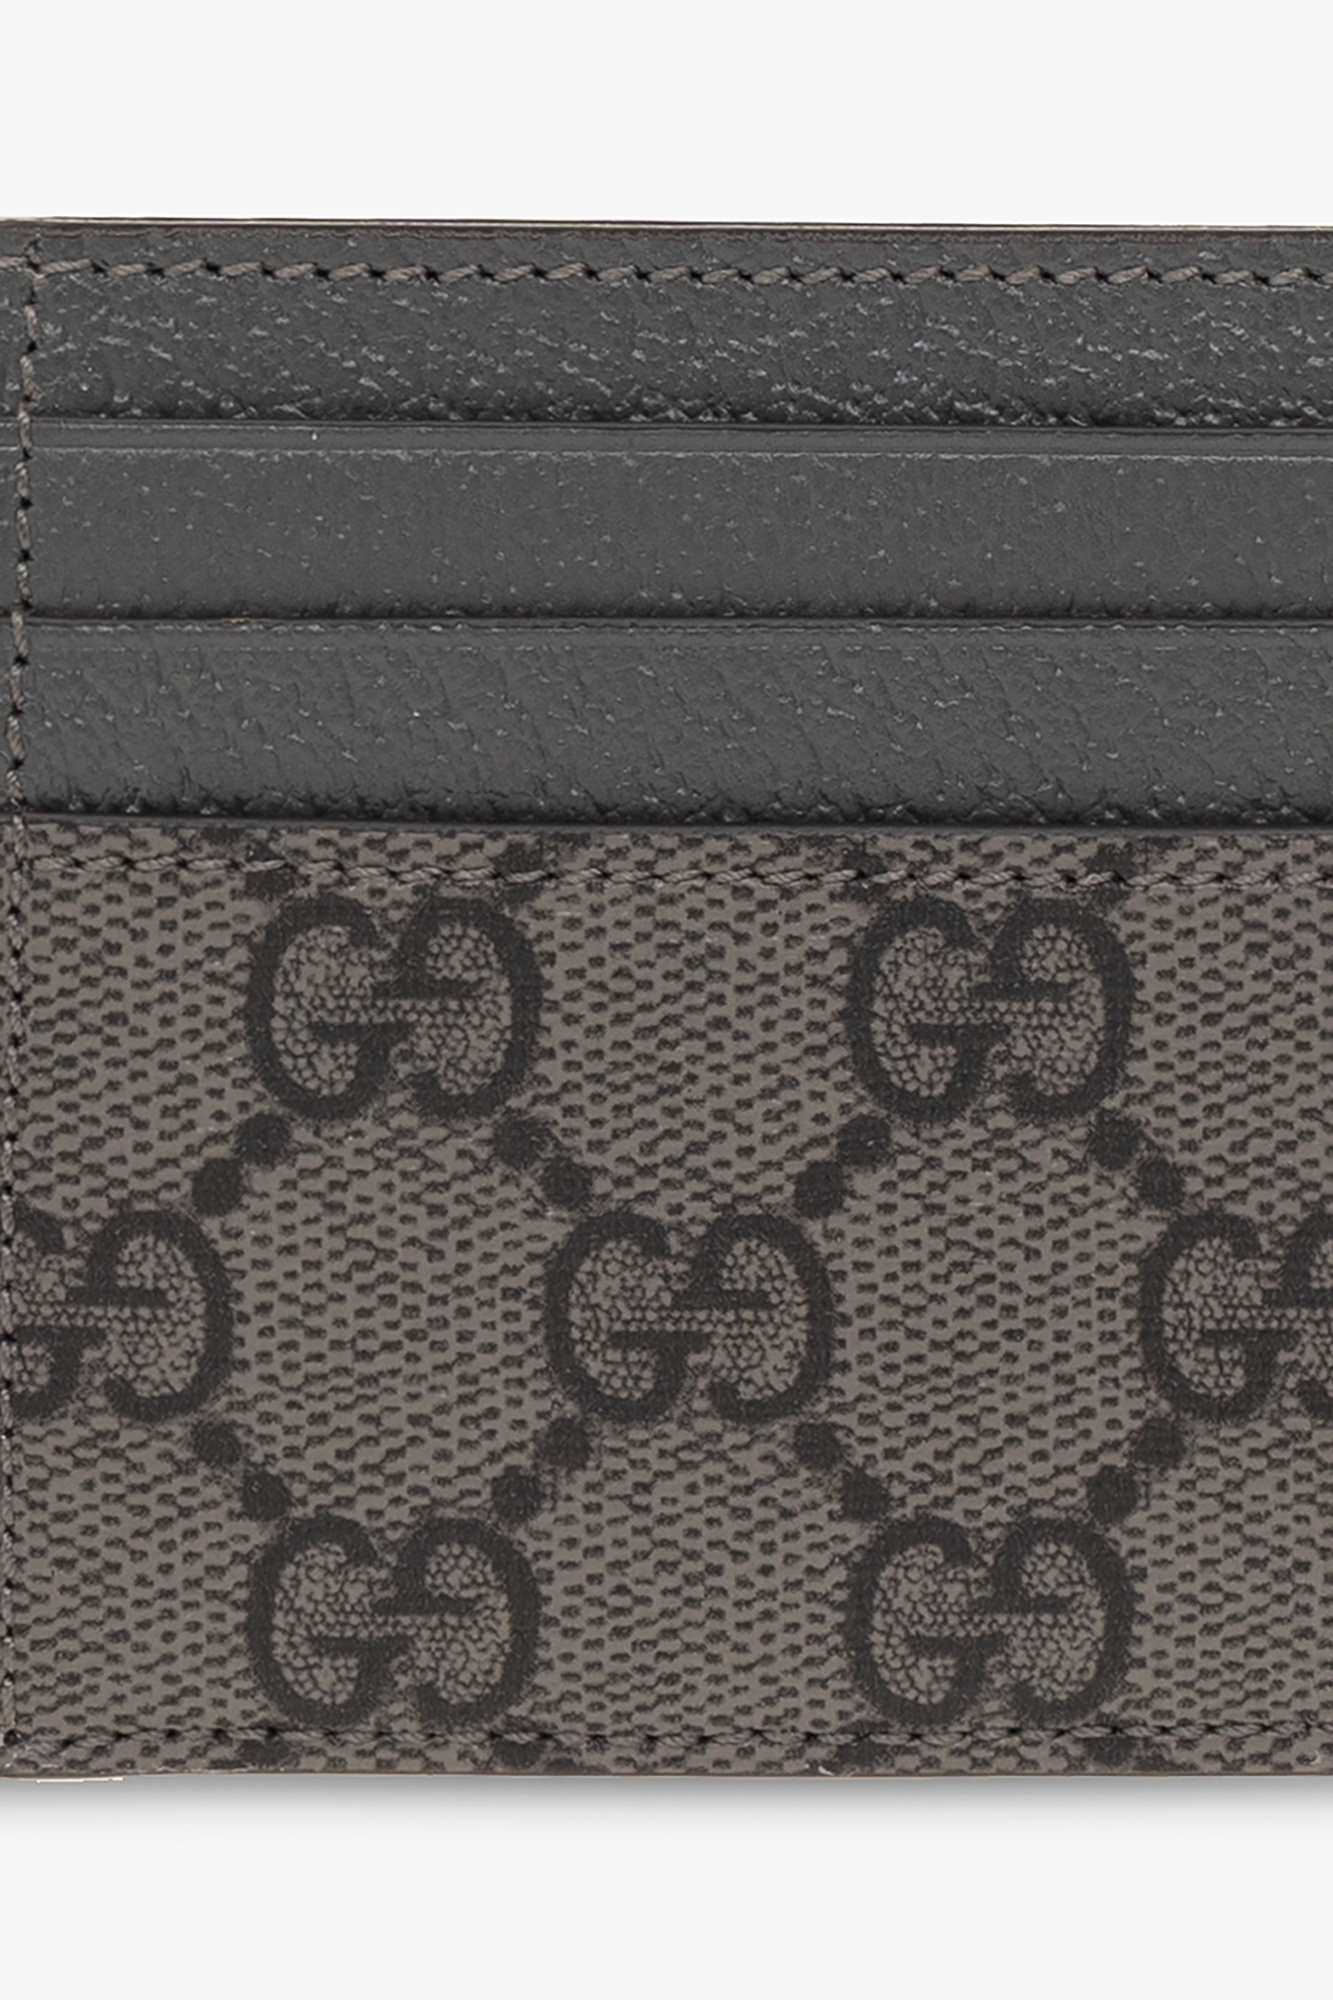 GUCCI GG Tennis Logo-Embossed Leather Cardholder for Men